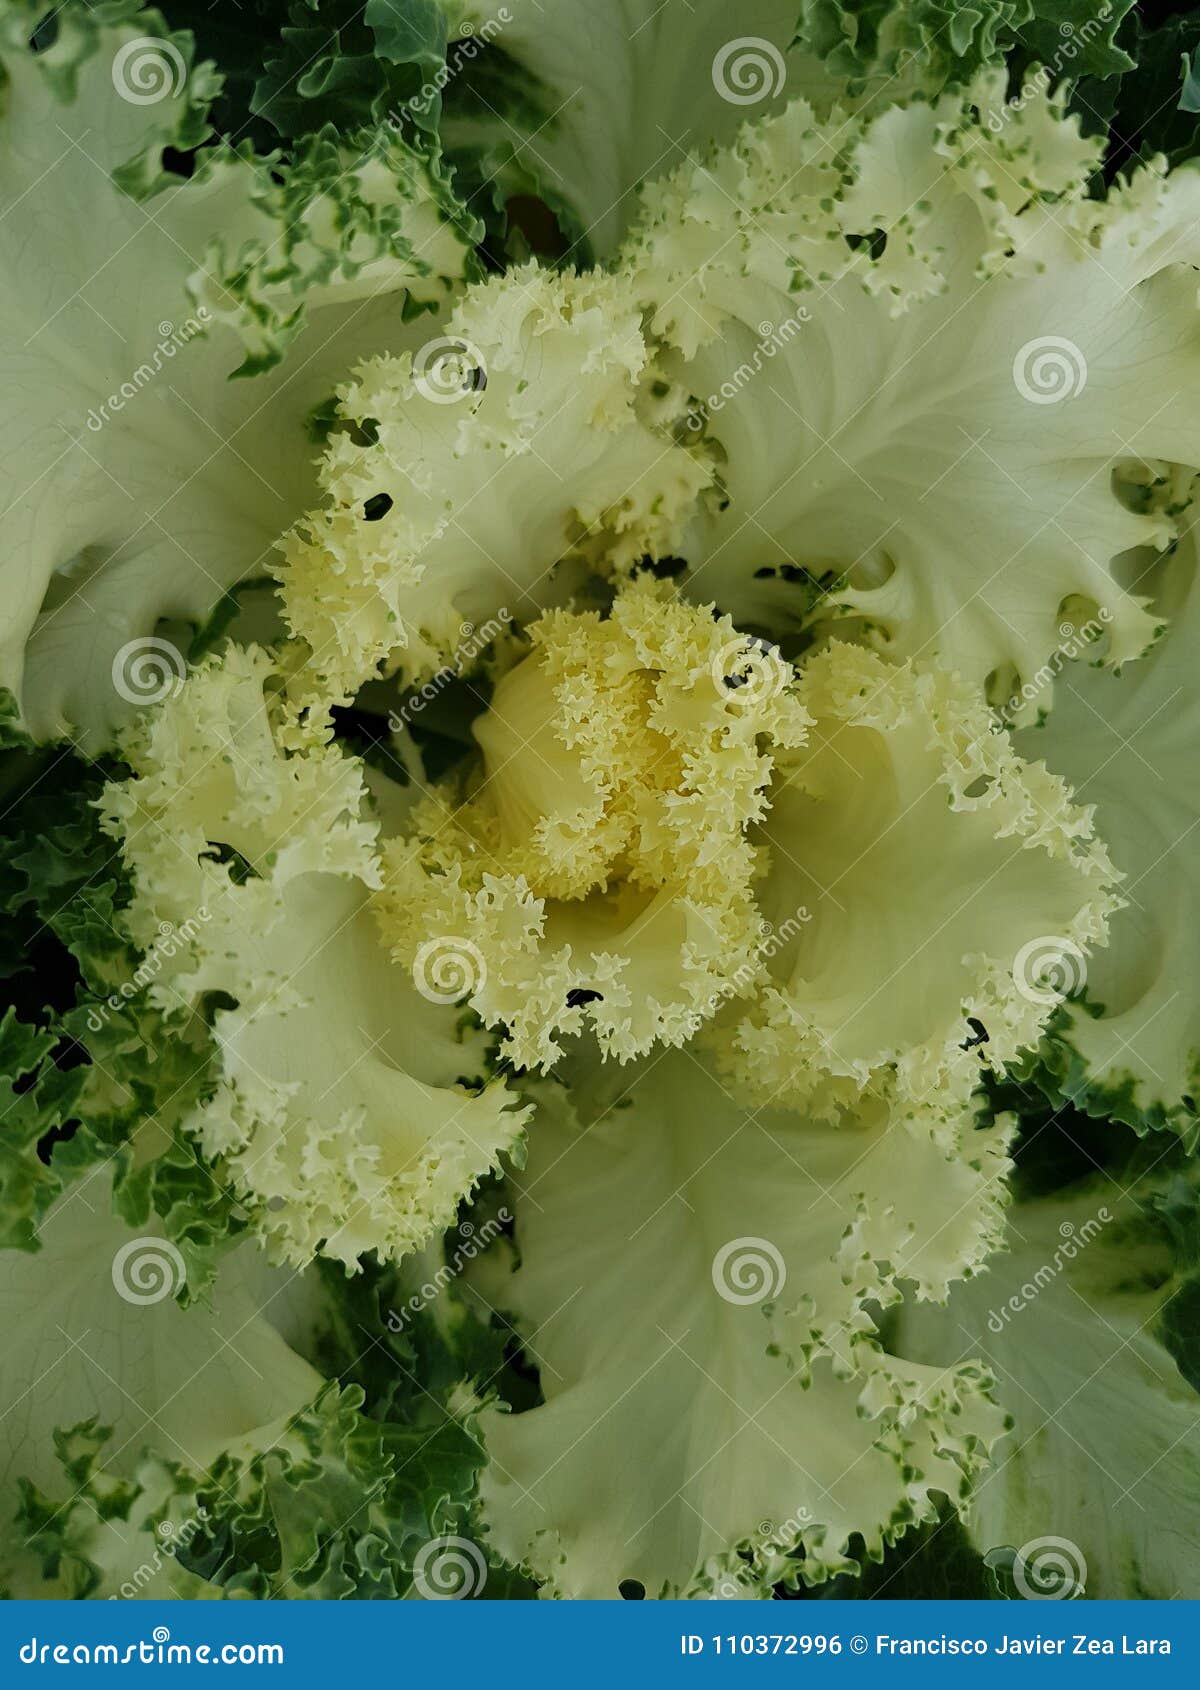 brassica oleracea, decorative plant in green with white